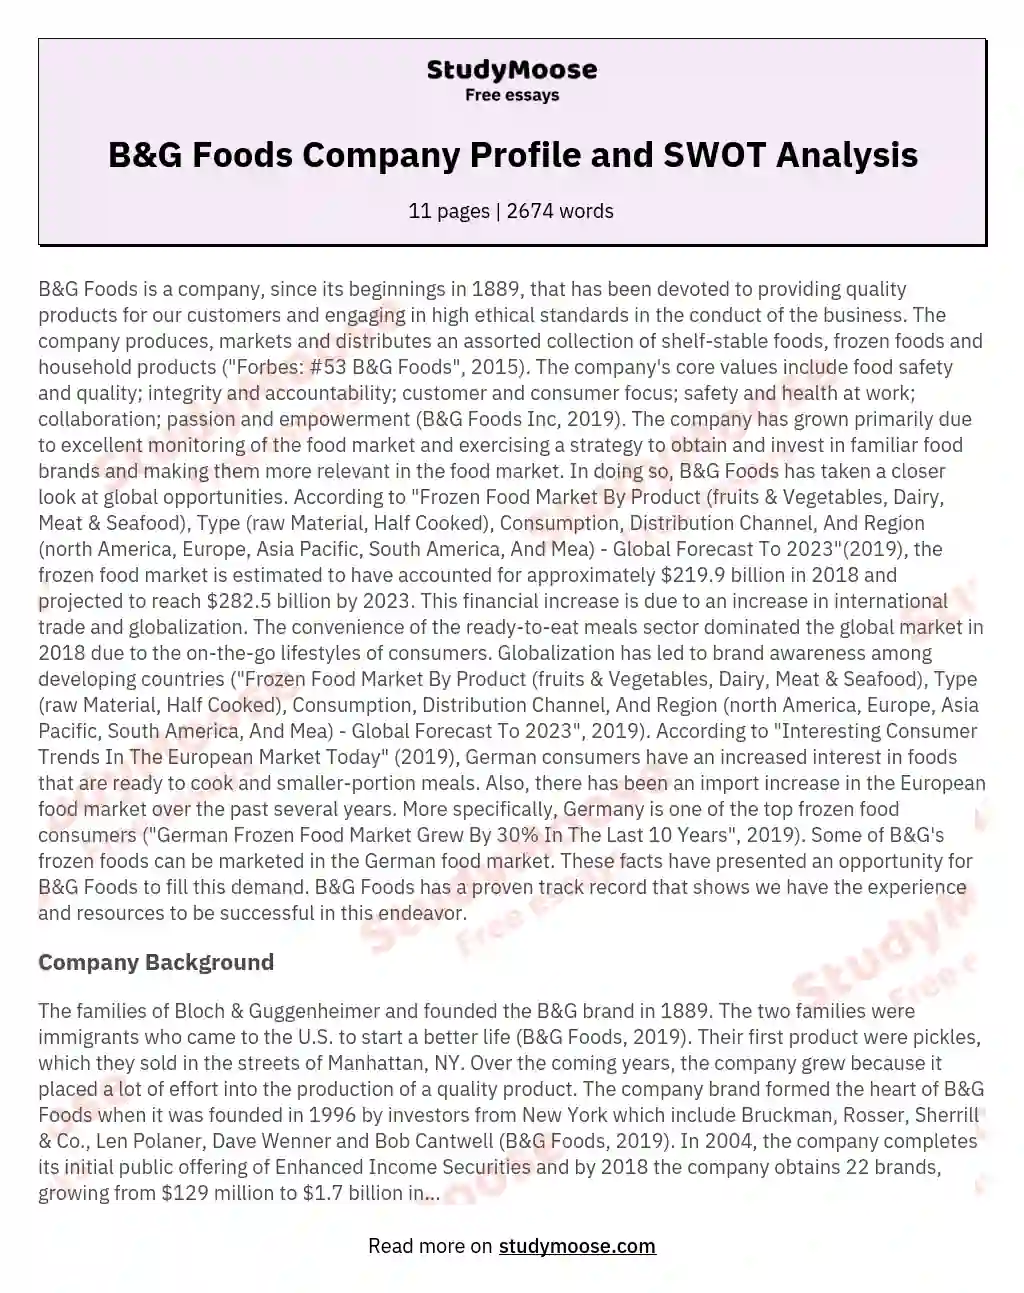 B&G Foods Company Profile and SWOT Analysis